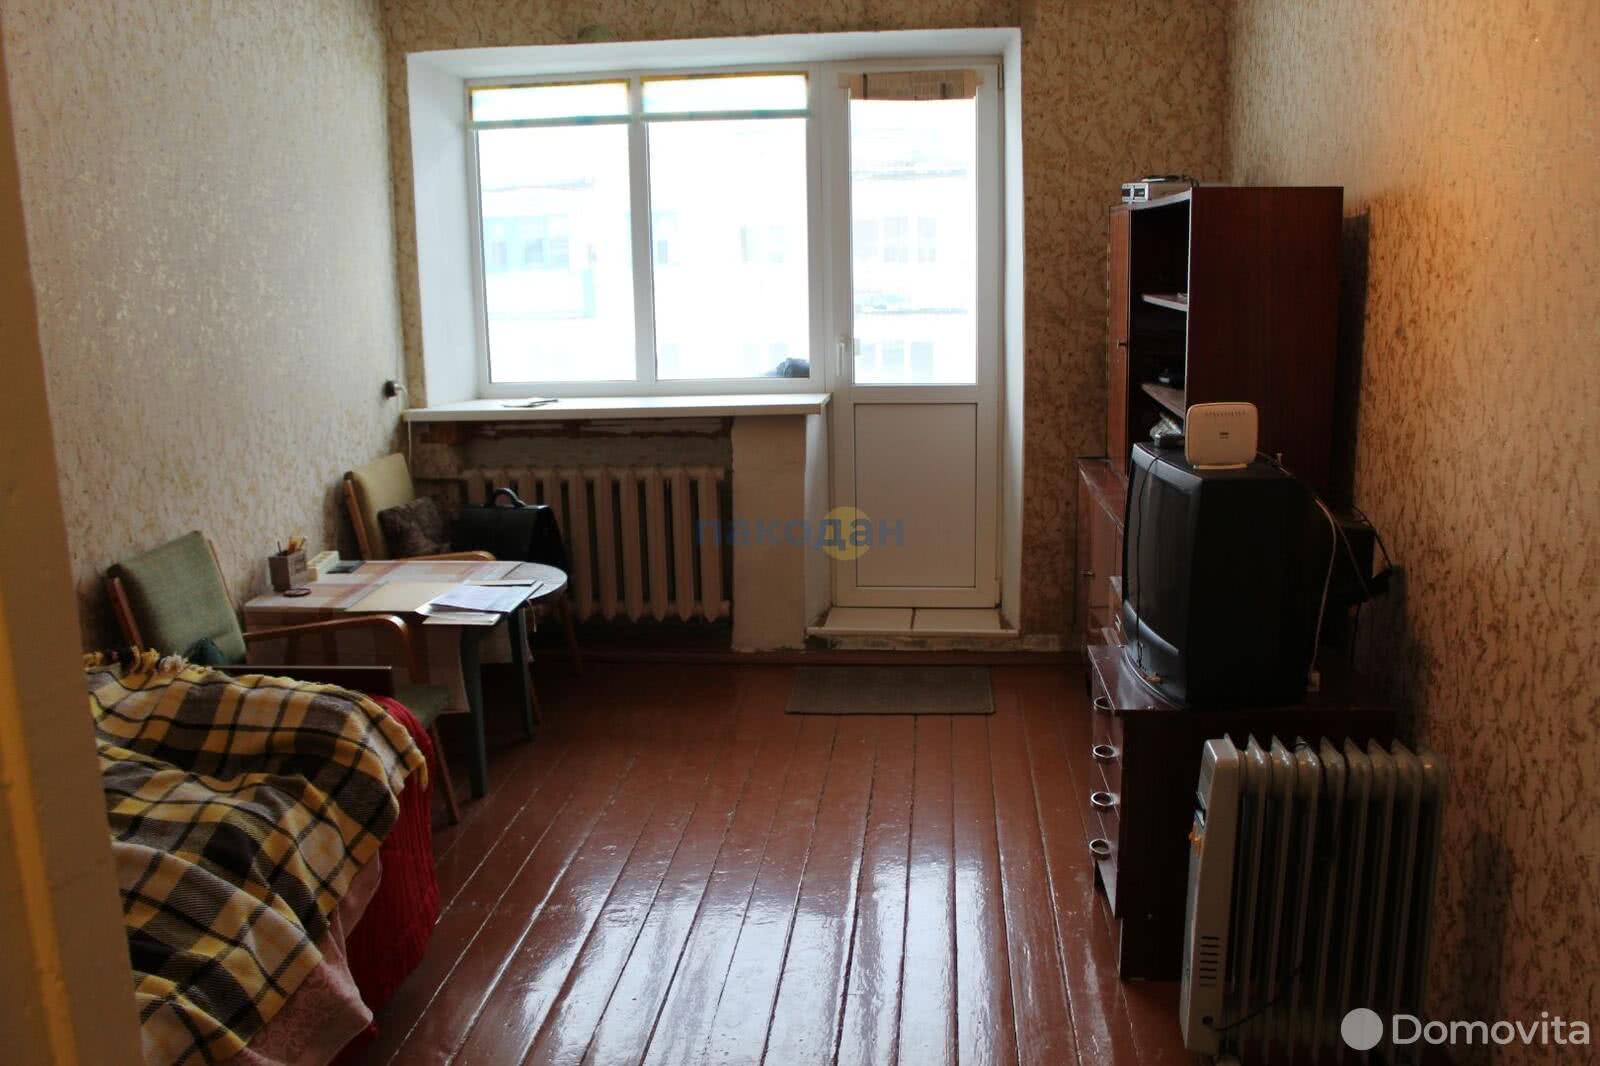 квартира, Ганцевичи, ул. Гагарина, д. 5, стоимость продажи 29 809 р.